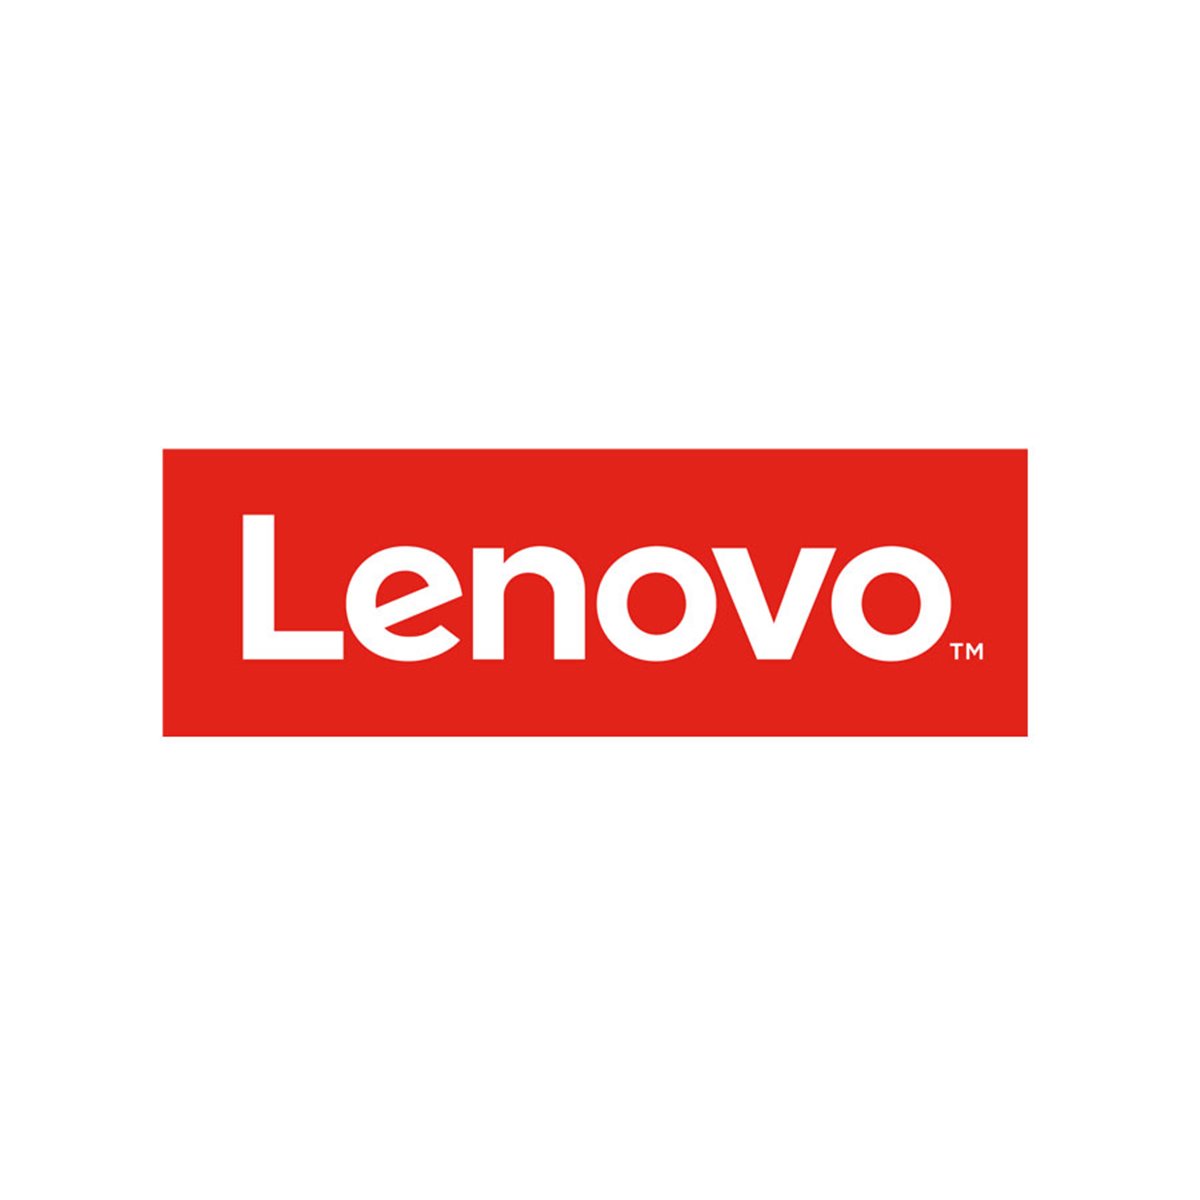 Lenovo Storwize Family for V700 - Real-time Compression